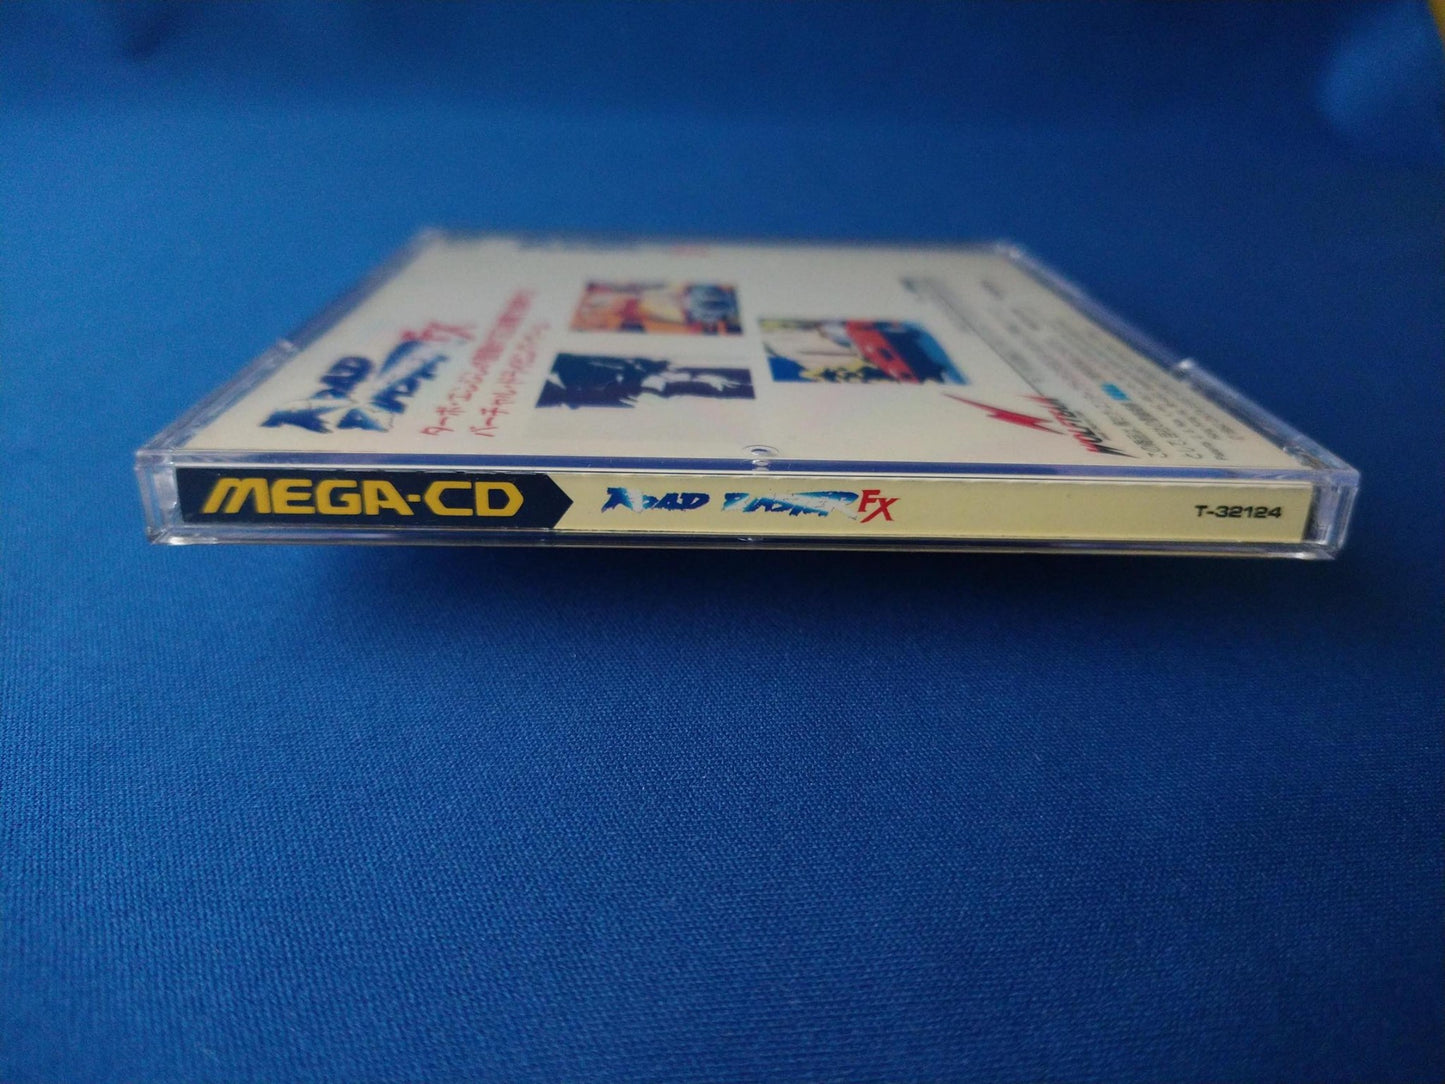 ROAD BLASTER FX MEGA CD shooter game Disk, Manual, Box set, Working -f0524-